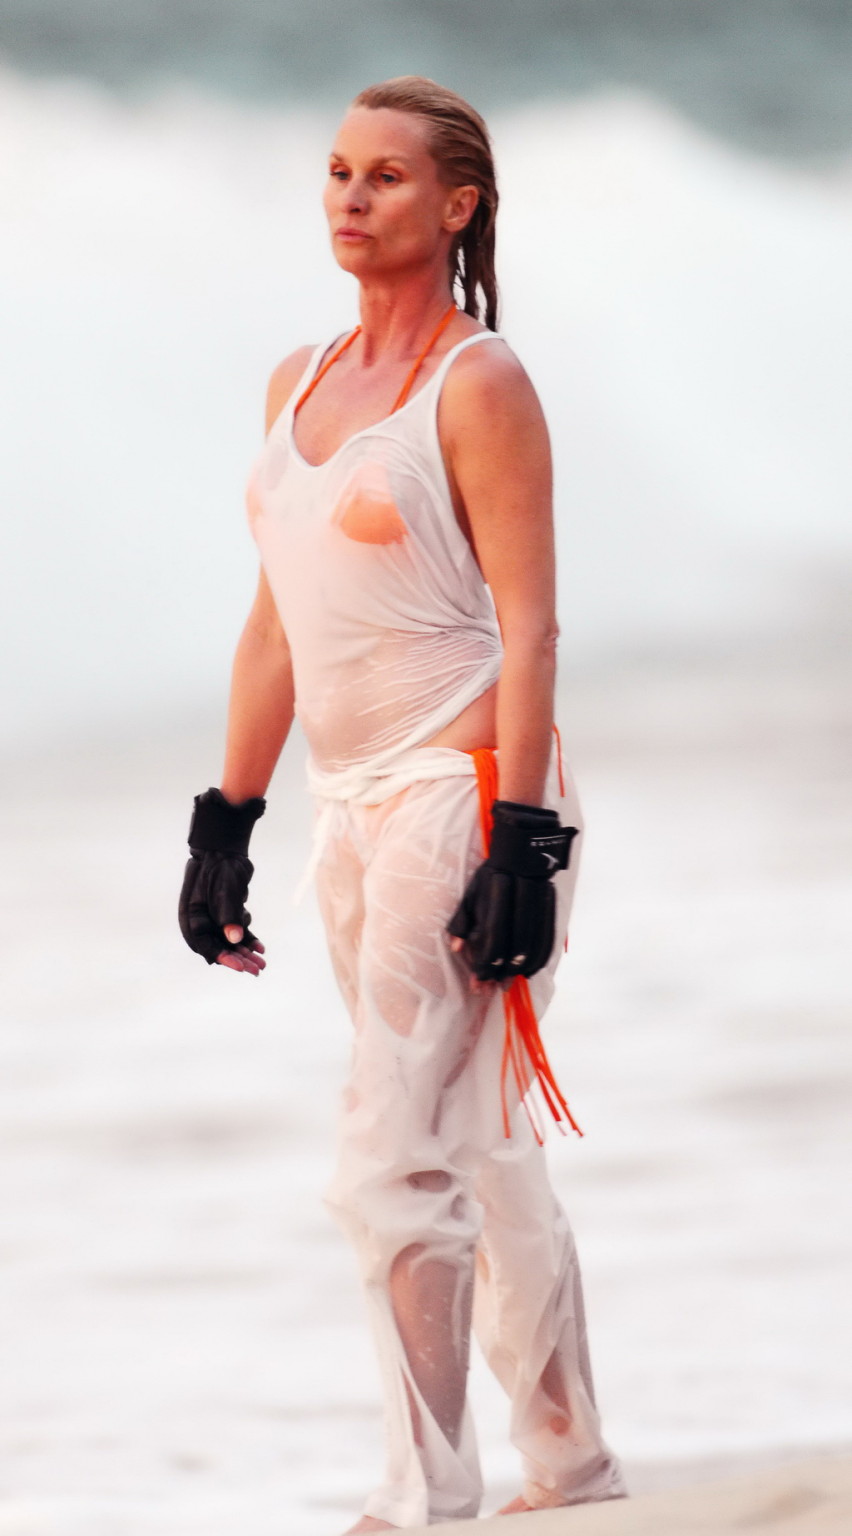 Nicollette Sheridan showing her wet bikini body while training on the beach in S #75265614